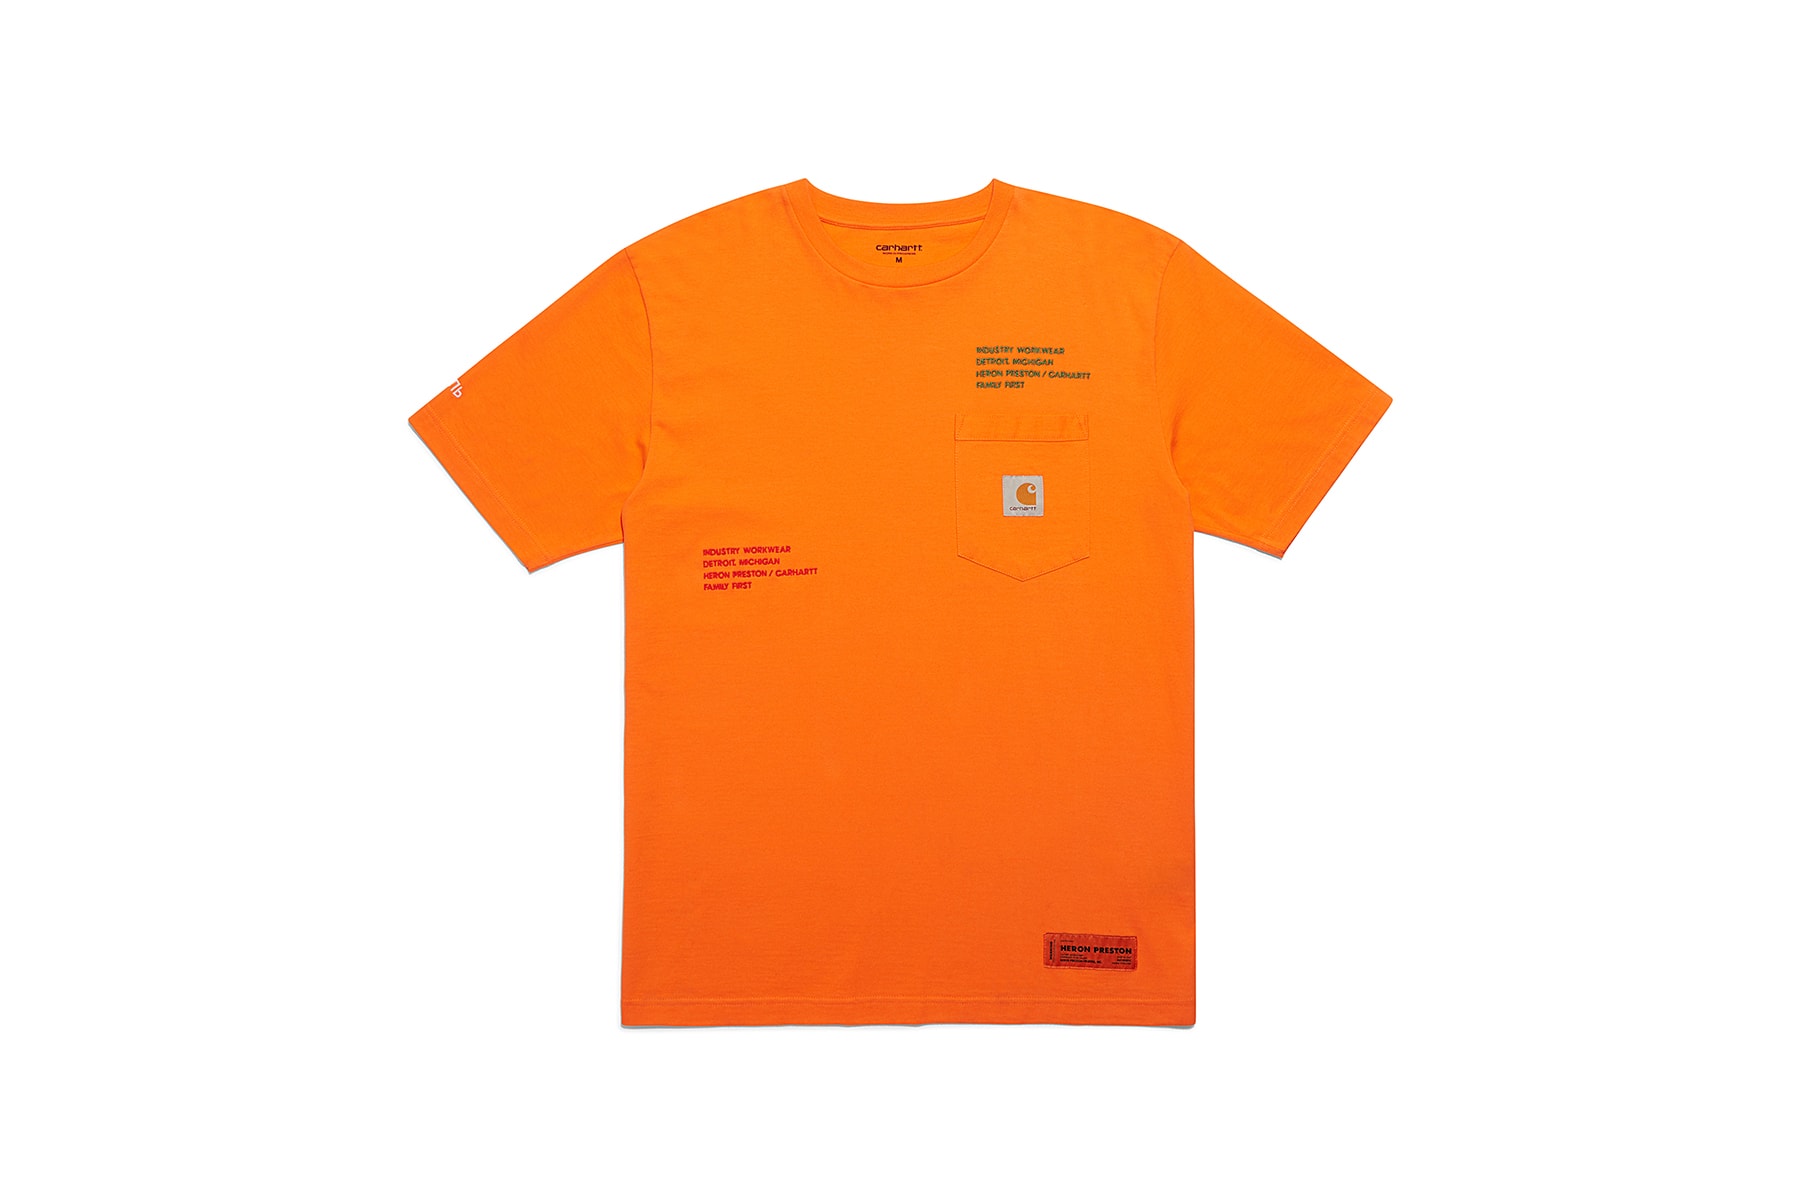 heron preston public figure fall winter 2018 collaboration carhartt wip pocket logo orange short sleeve tee shirt